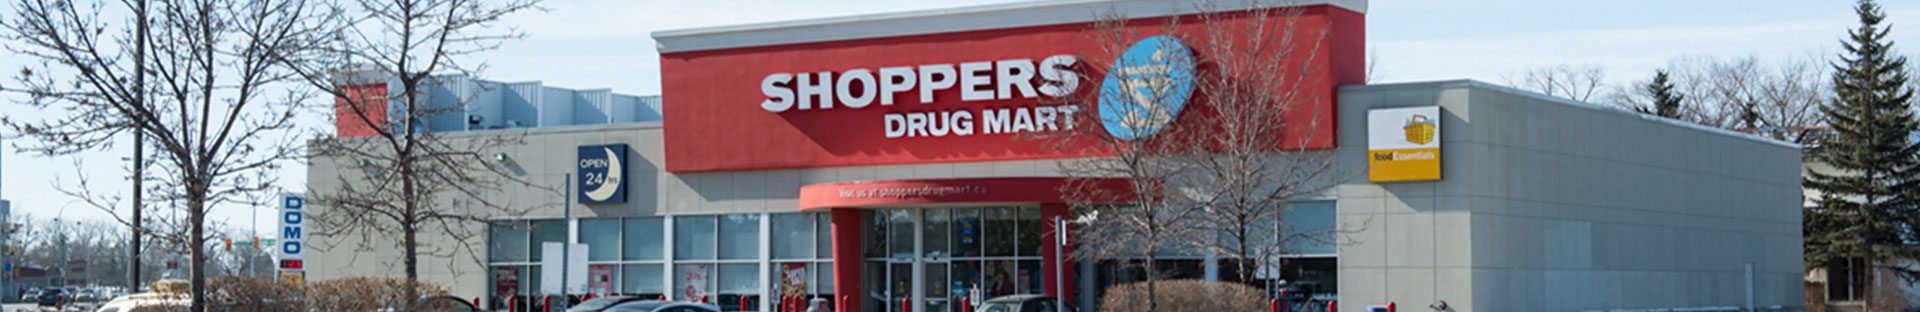 Exterior of Shoppers Drug Mart store at 2211 Pembina Highway in Winnipeg, Manitoba